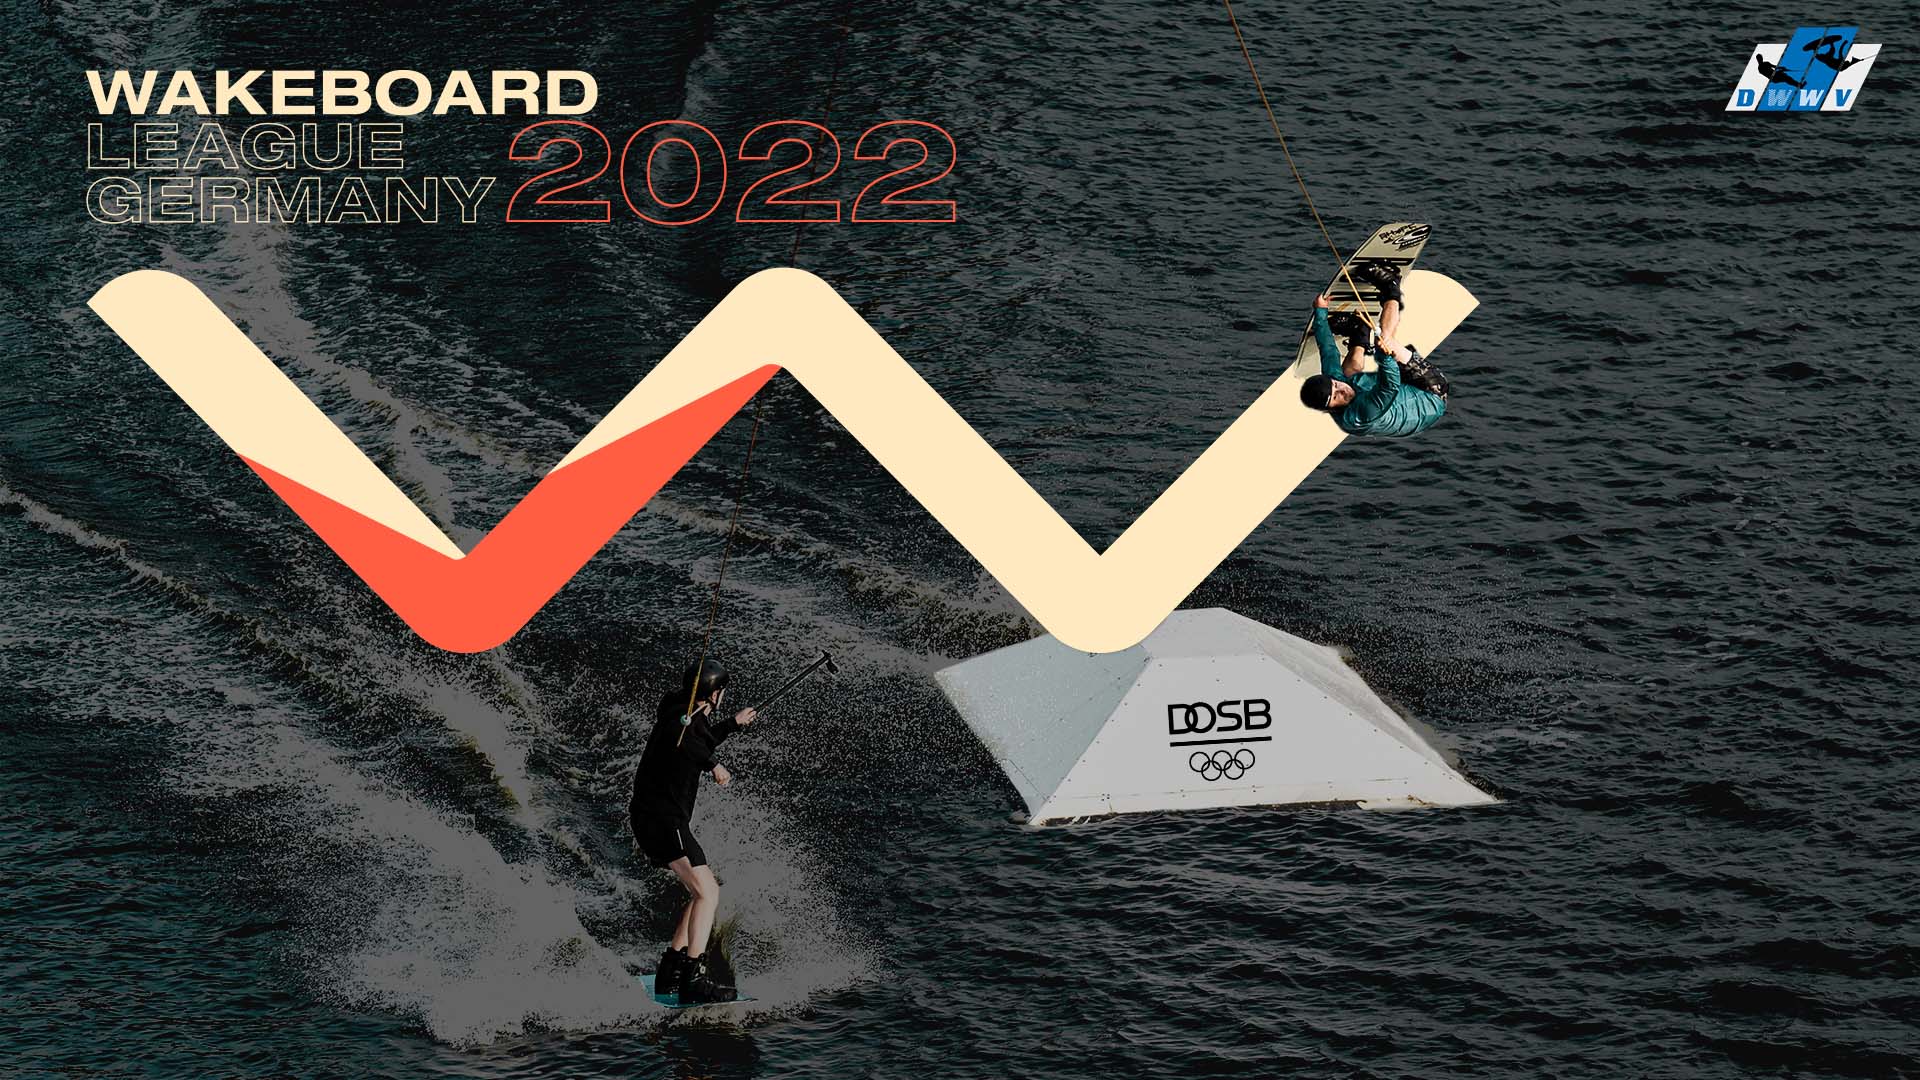 Wakeboard League Germany 2022